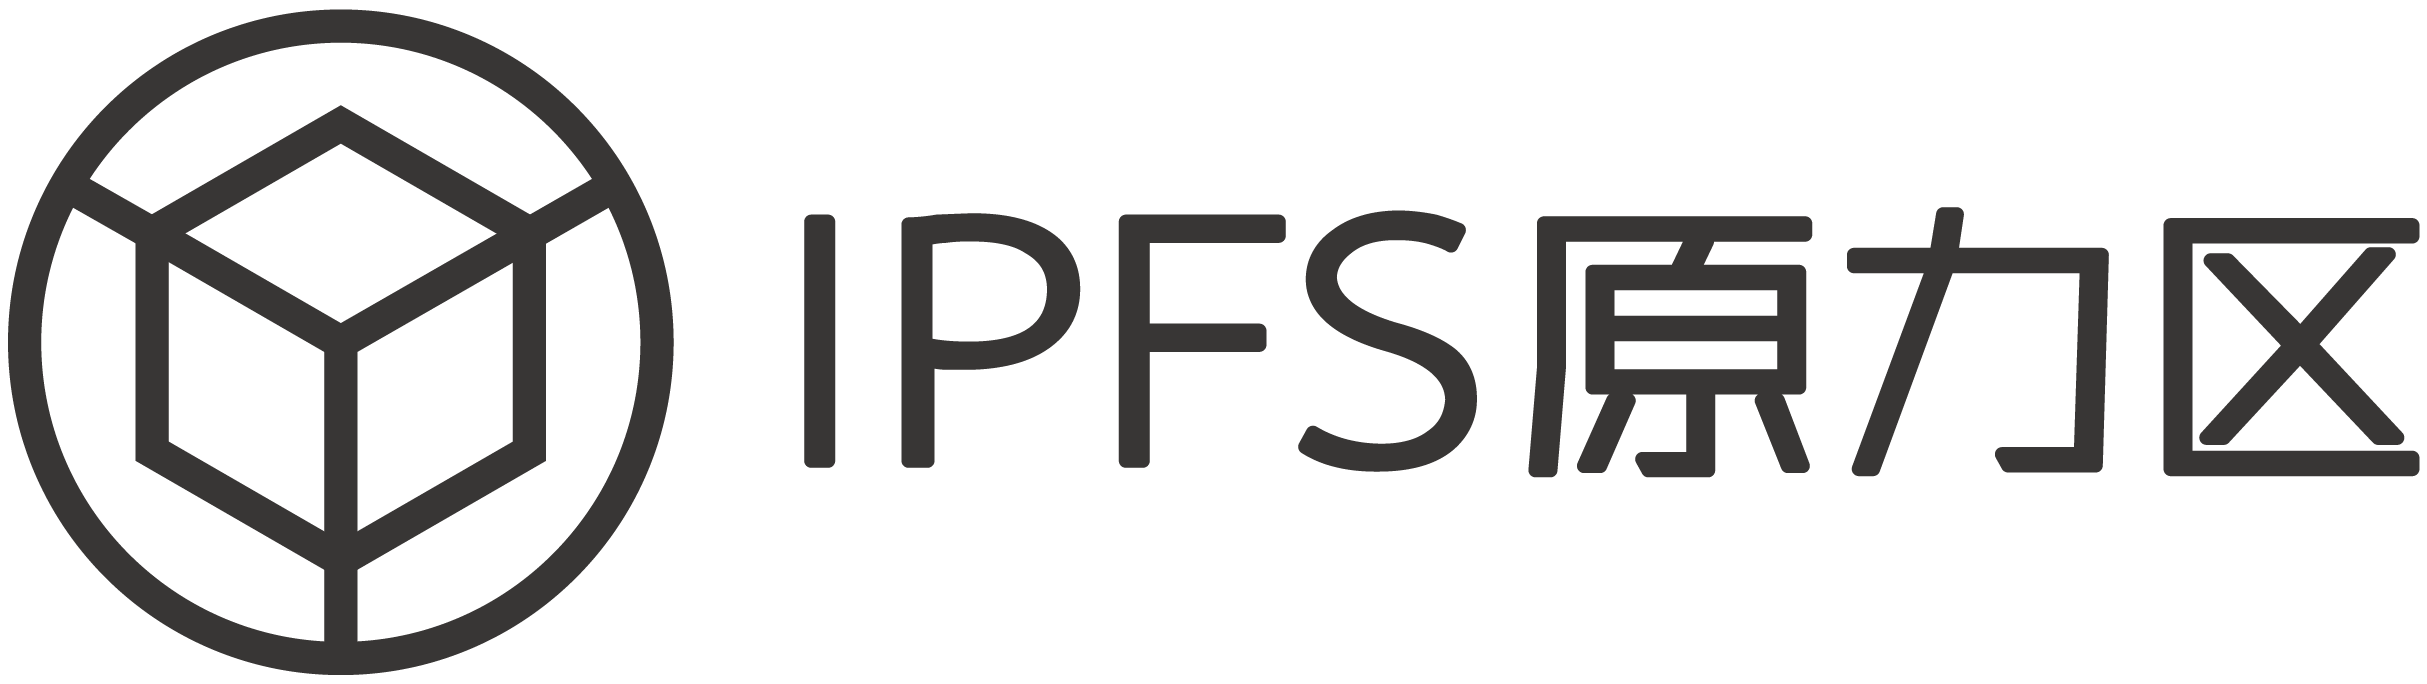 Ipfs logo 11 2